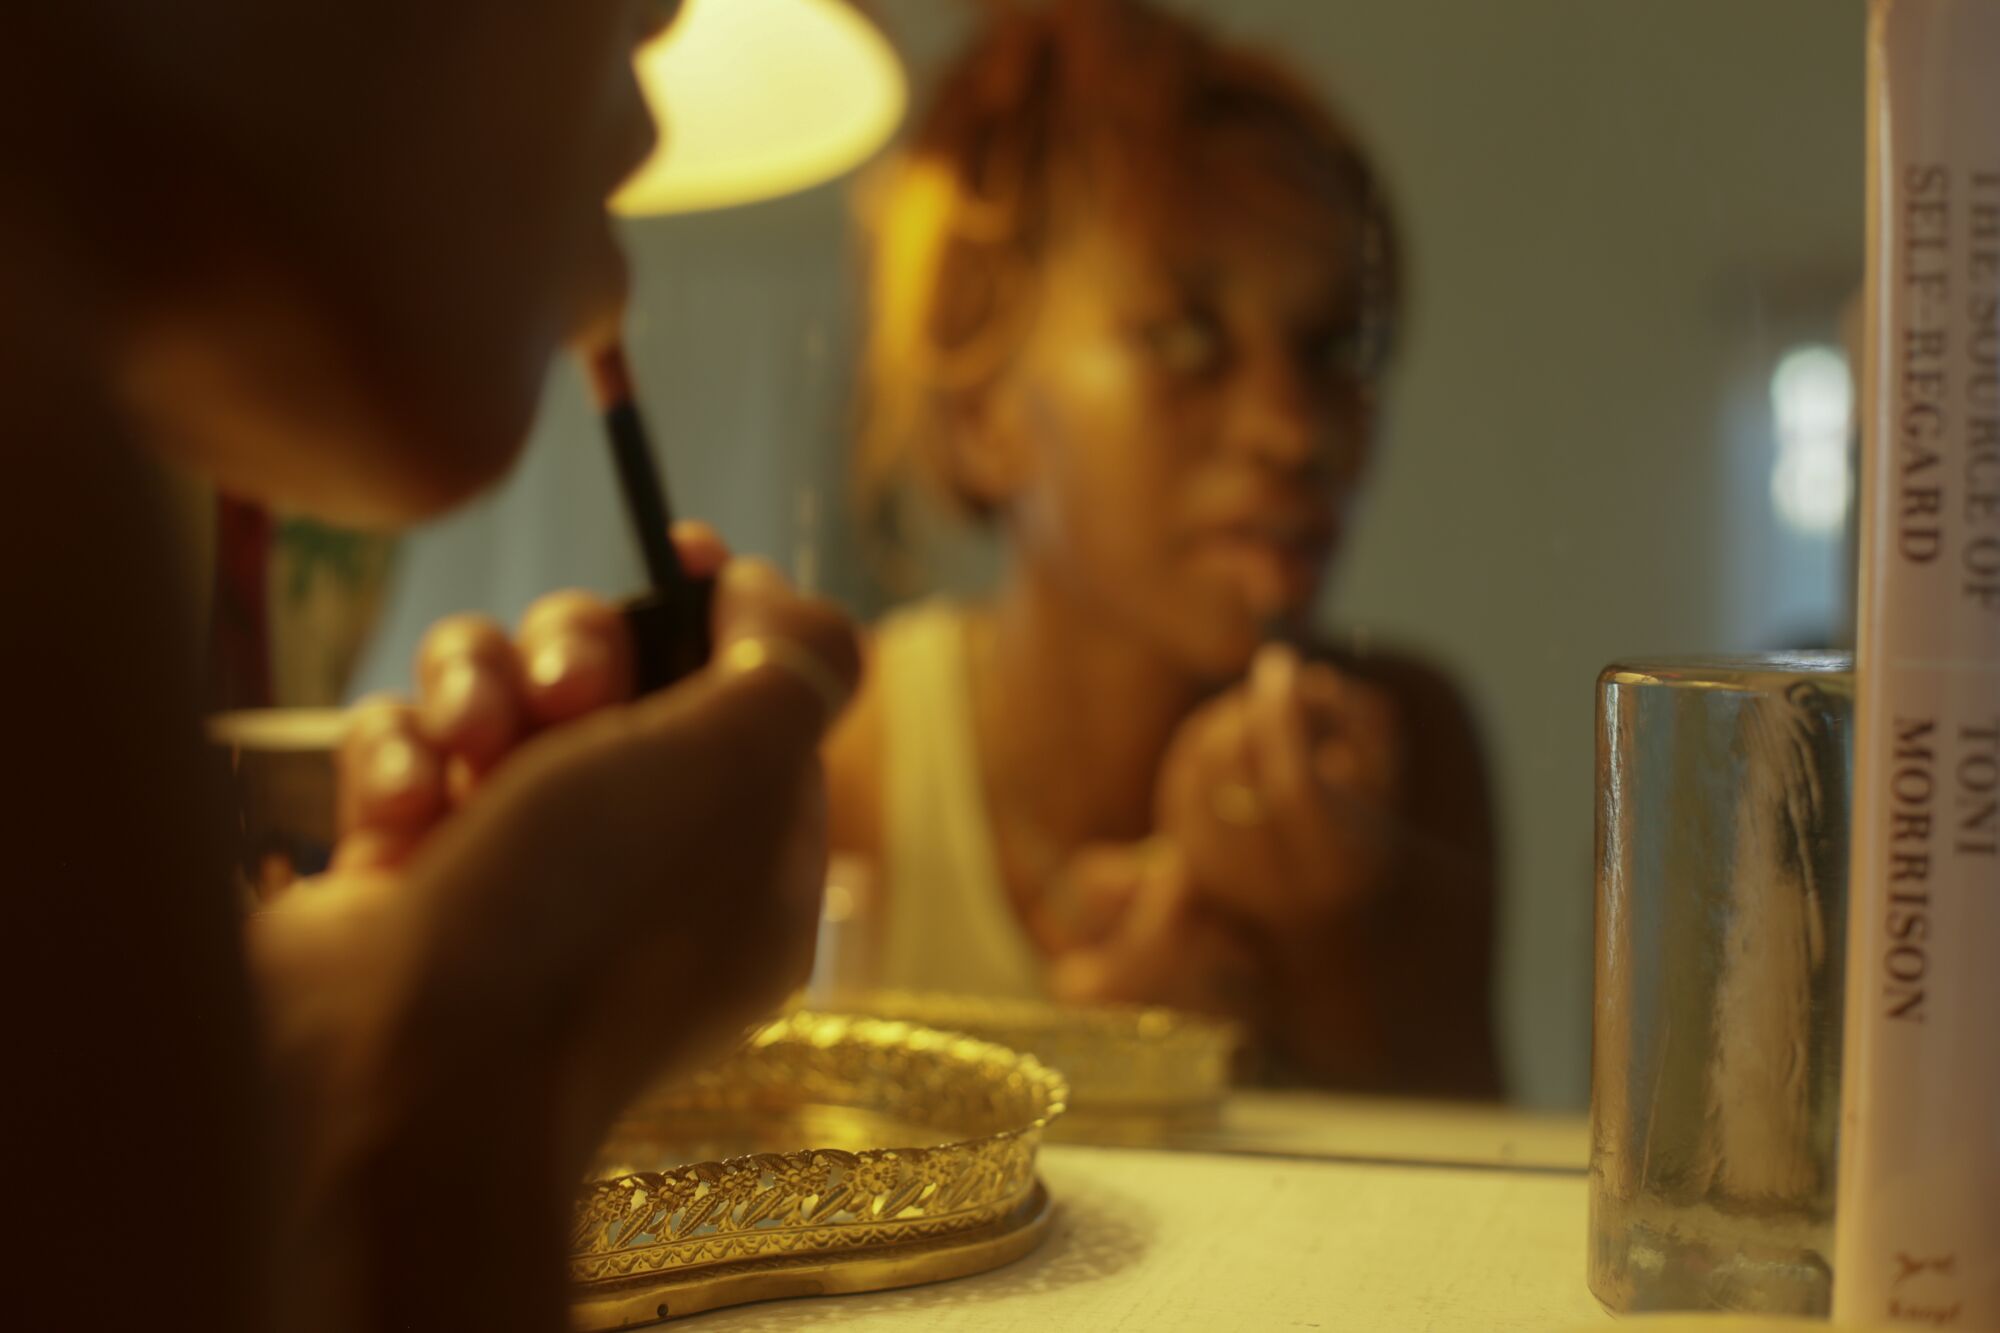 Rikkí Wright applying lipstick in the mirror.